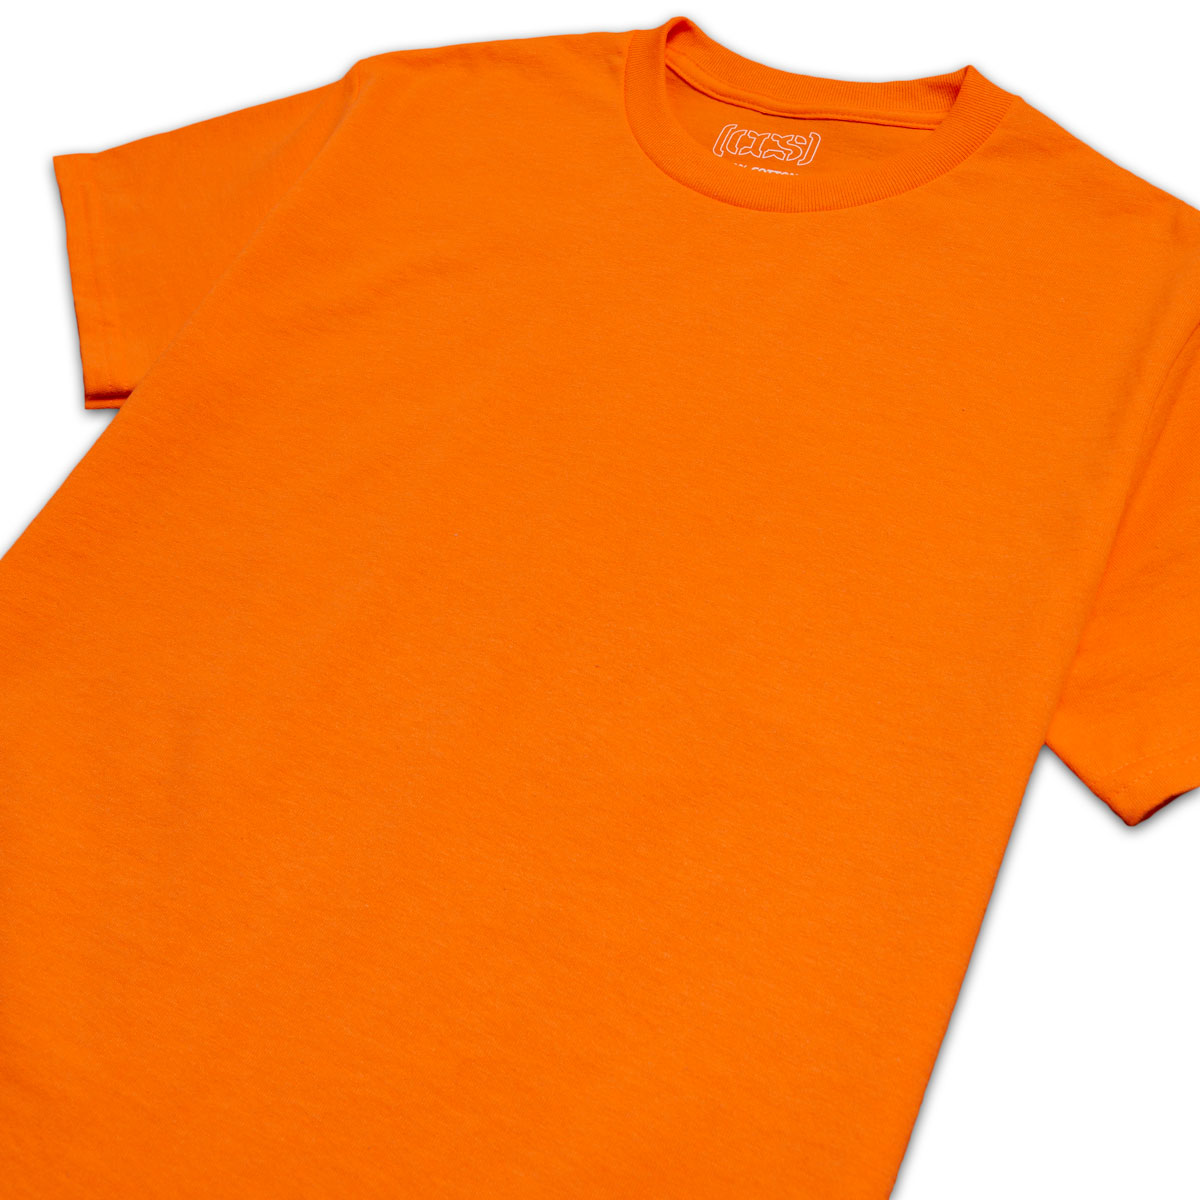 CCS Original Heavyweight T-Shirt - Orange image 2